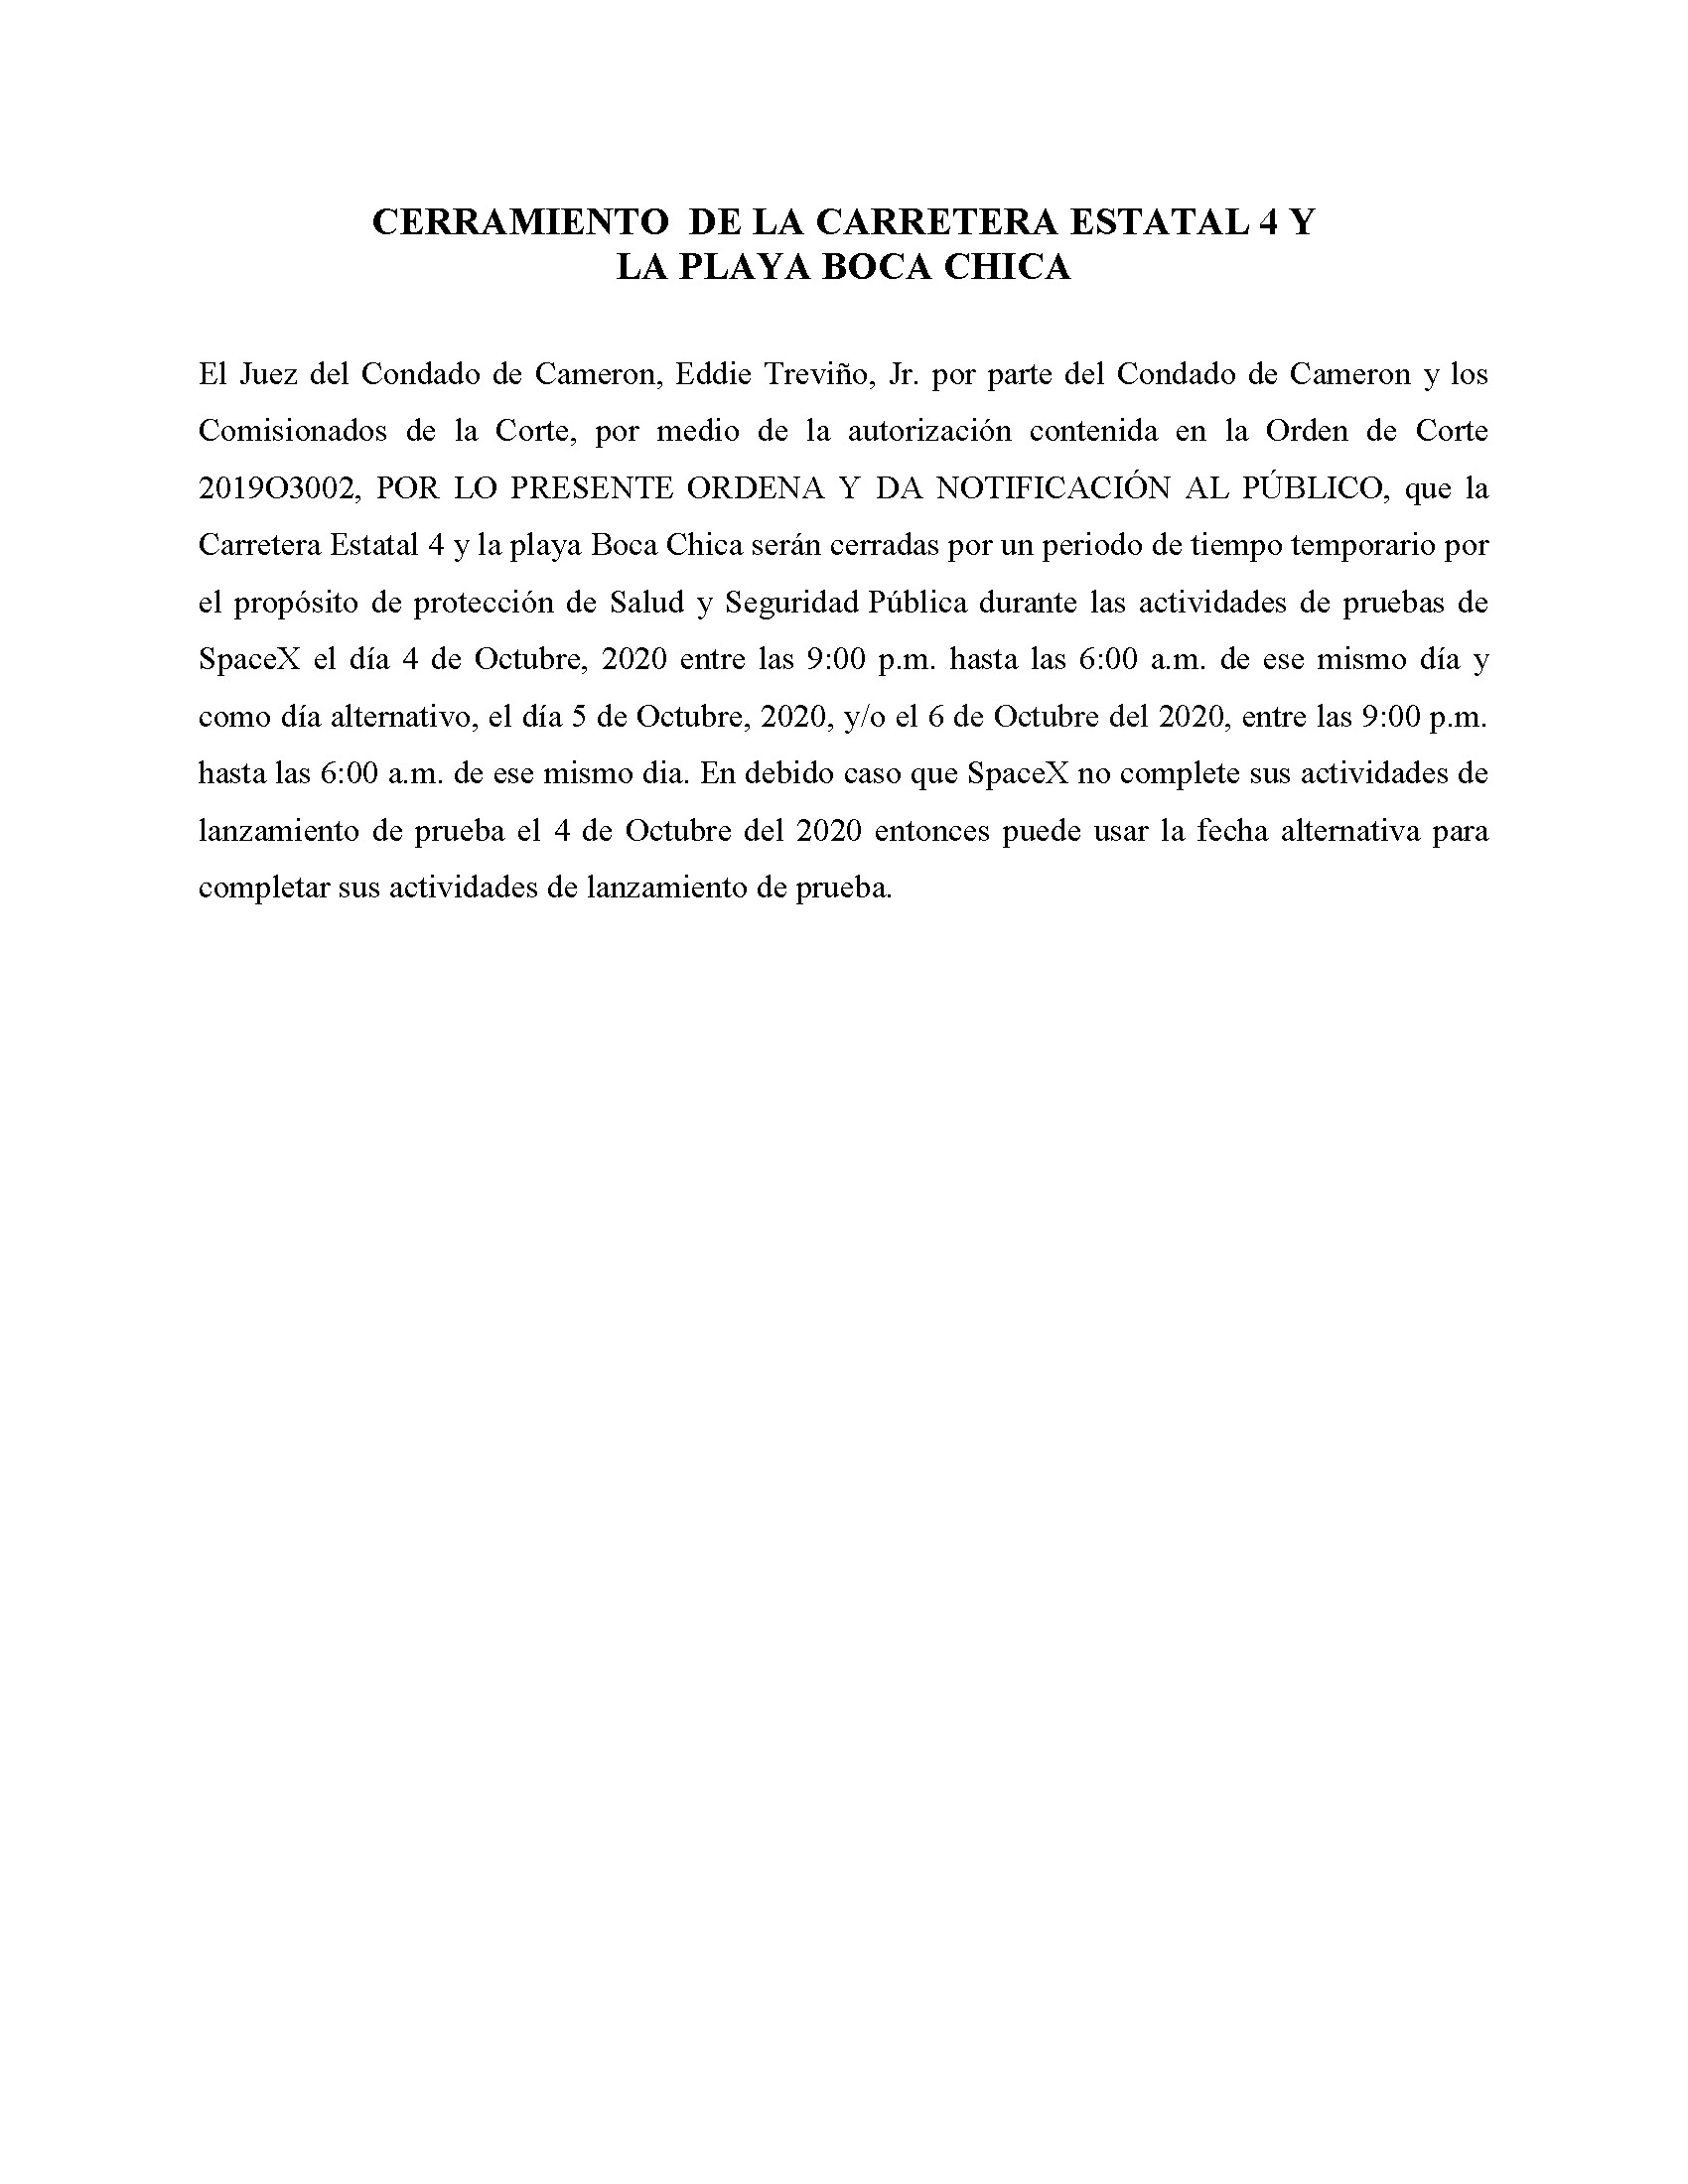 ORDER.CLOSURE OF HIGHWAY 4 Y LA PLAYA BOCA CHICA.SPANISH.10.04.20